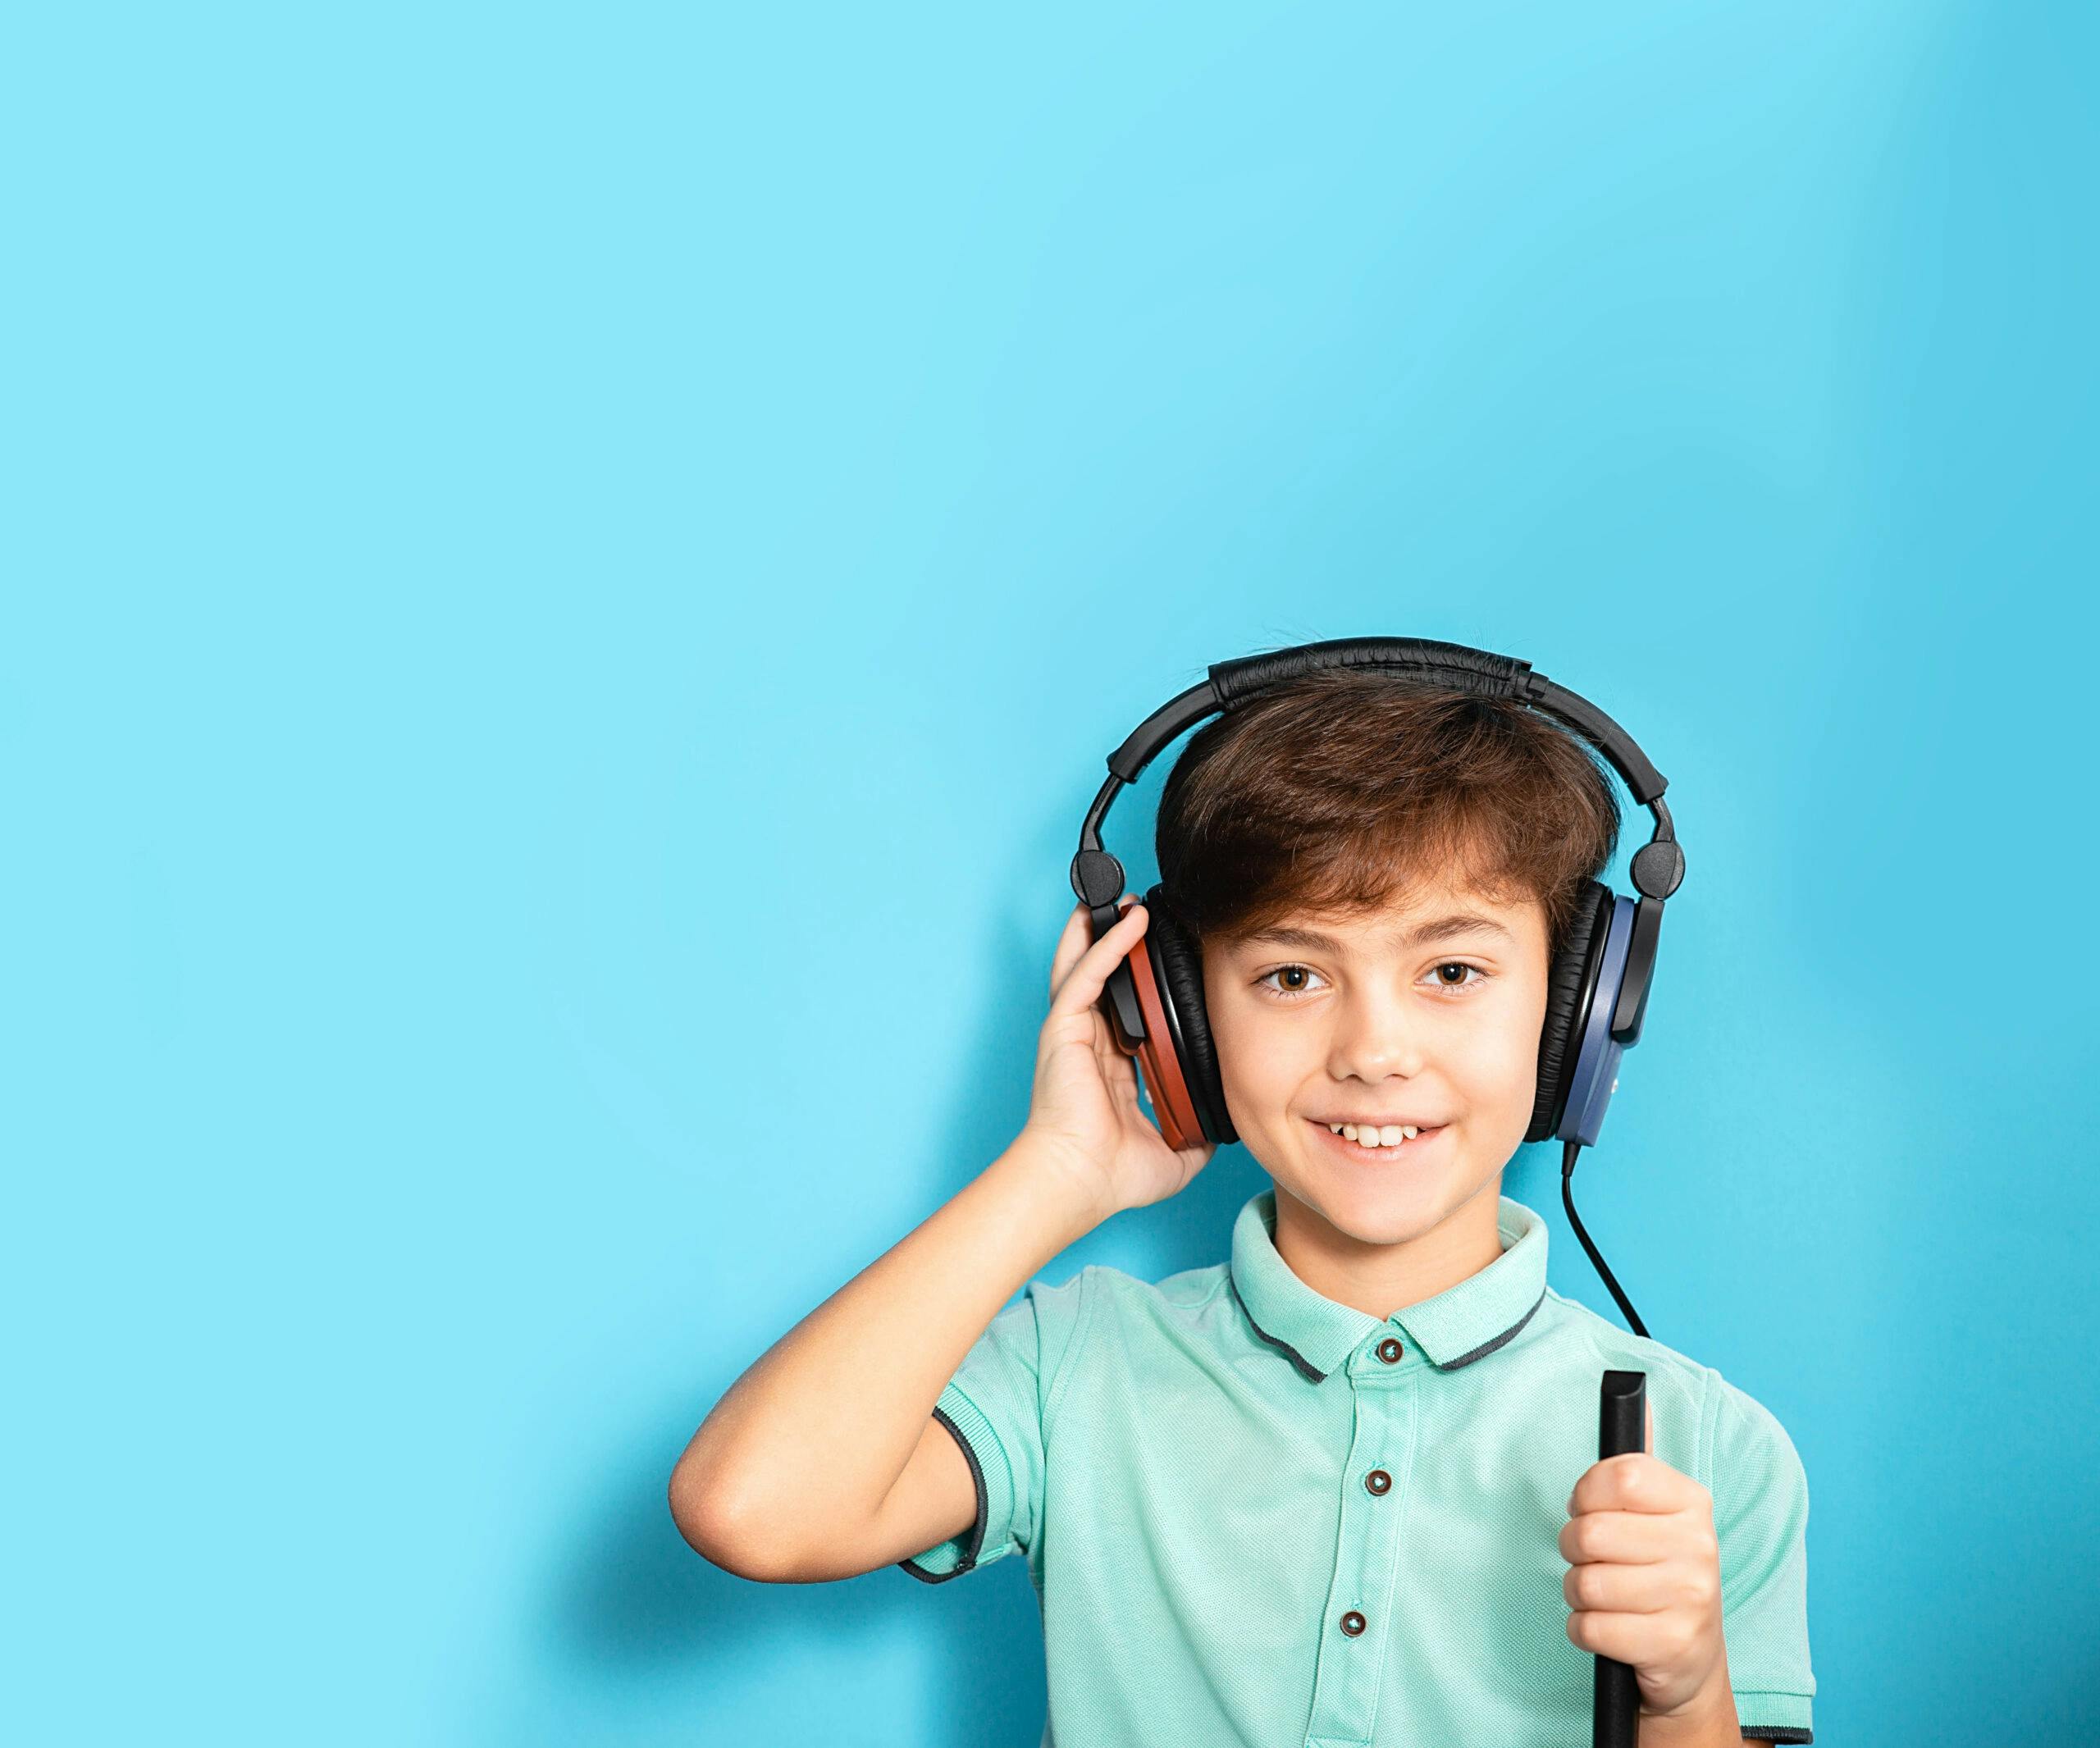 Child with headphones on